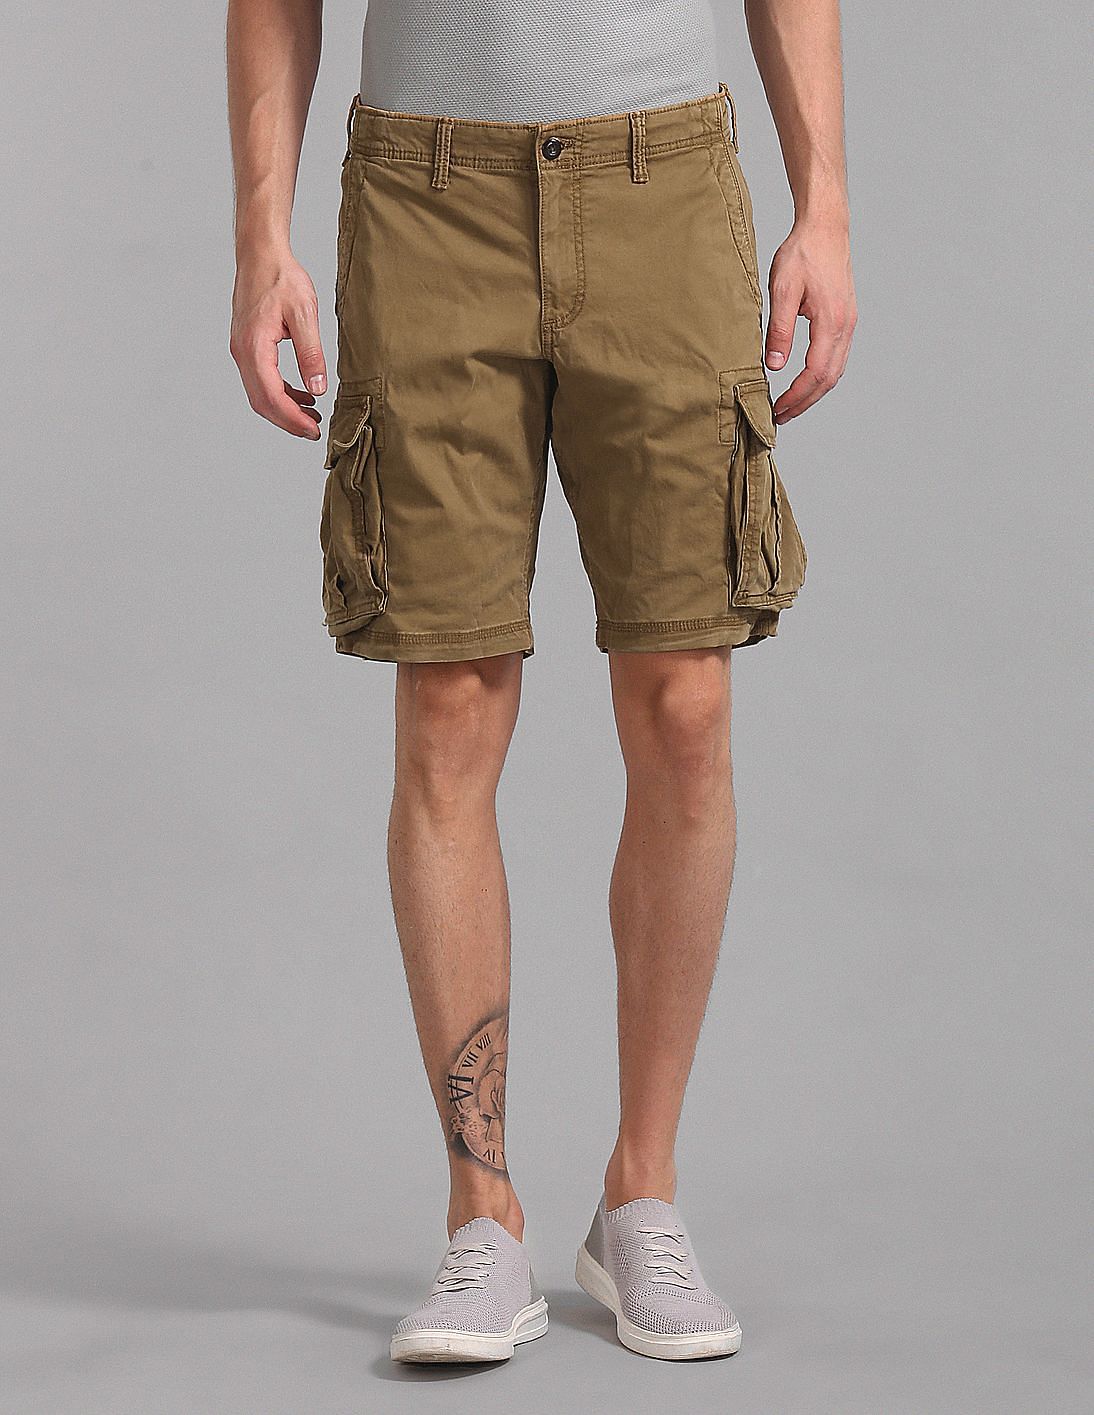 The Best Cargo Shorts For Men